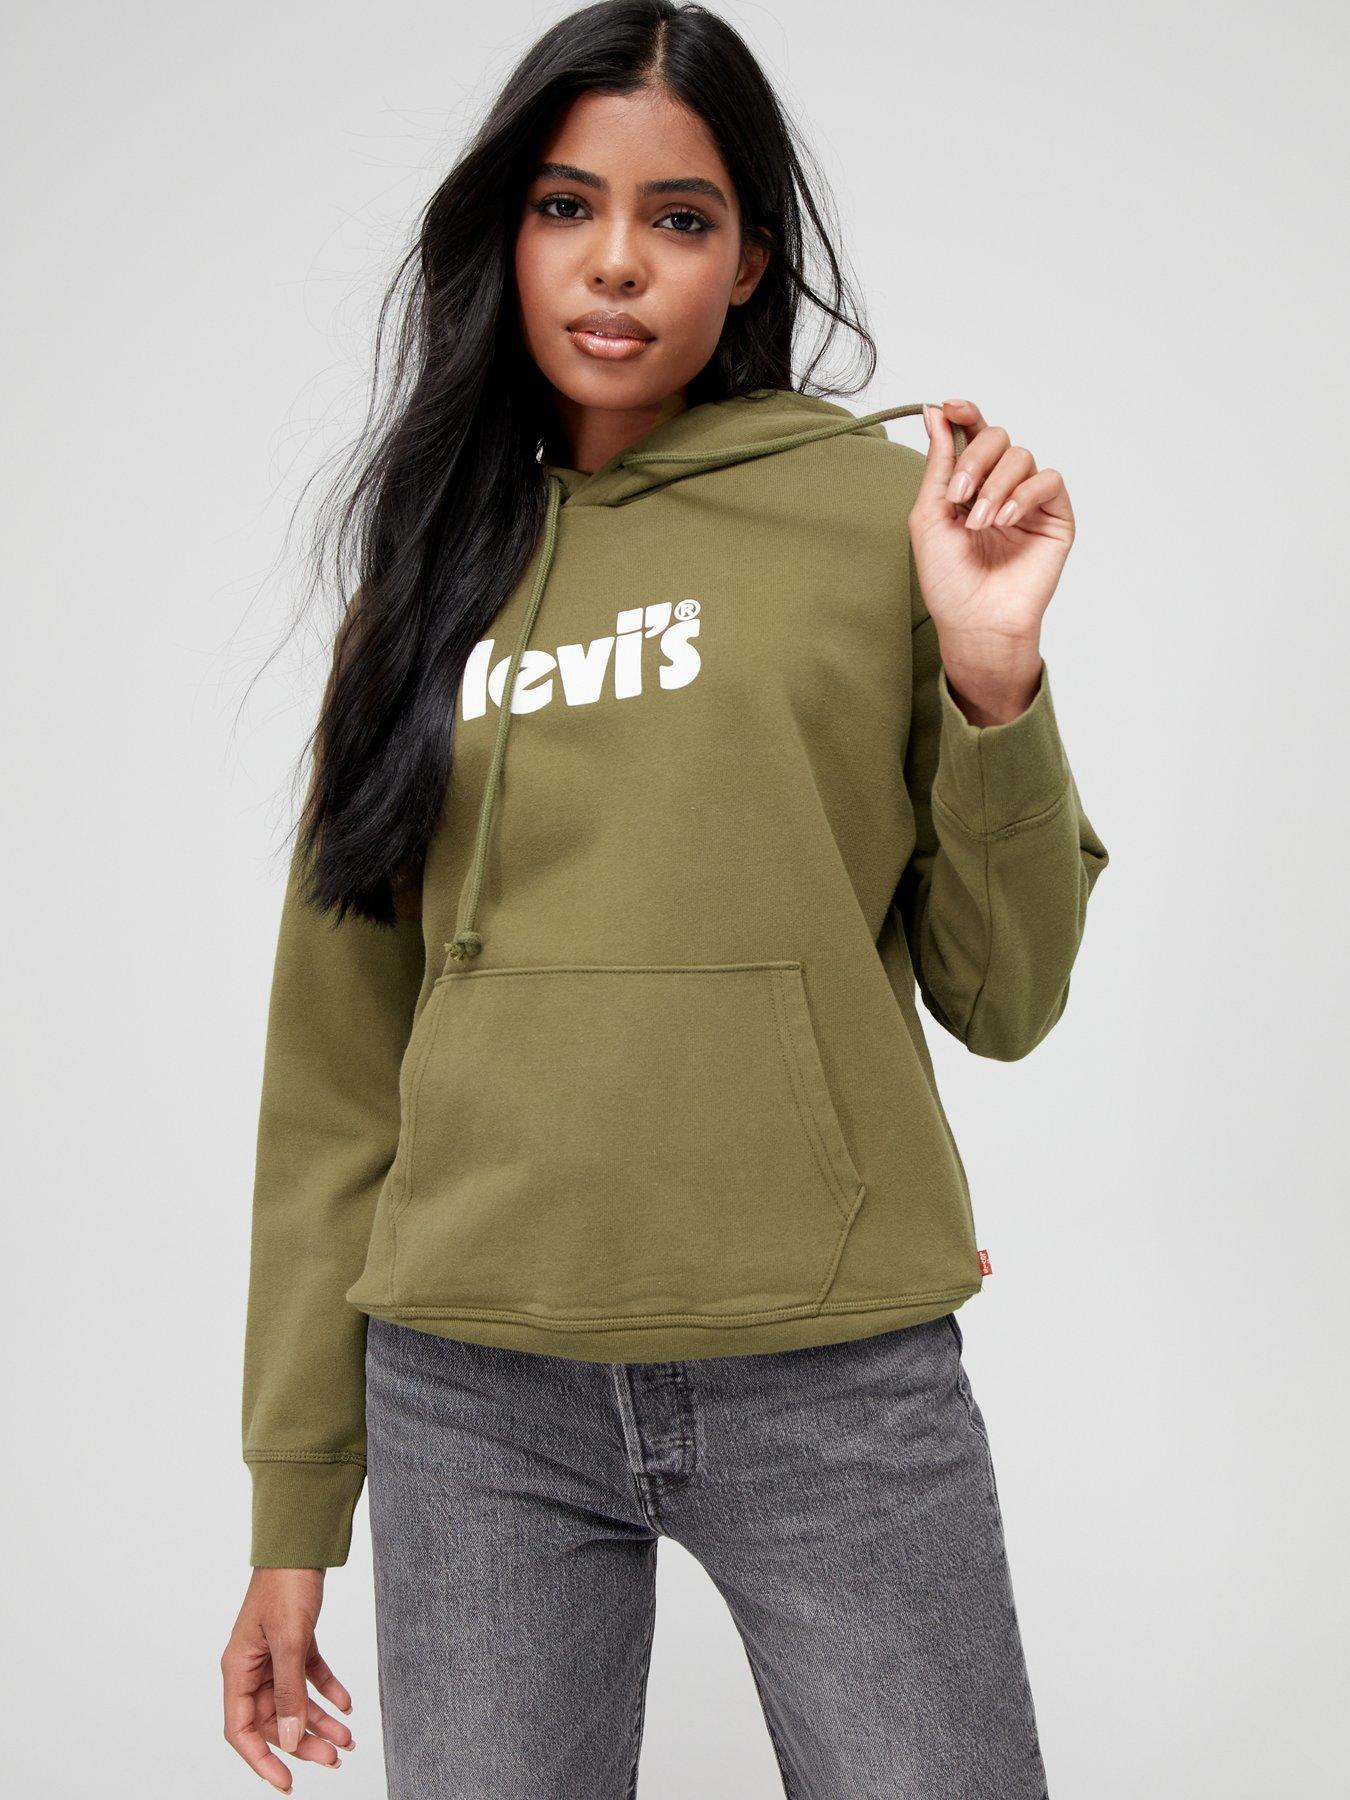 S | Levi's | Hoodies & sweatshirts | Women | Very Ireland